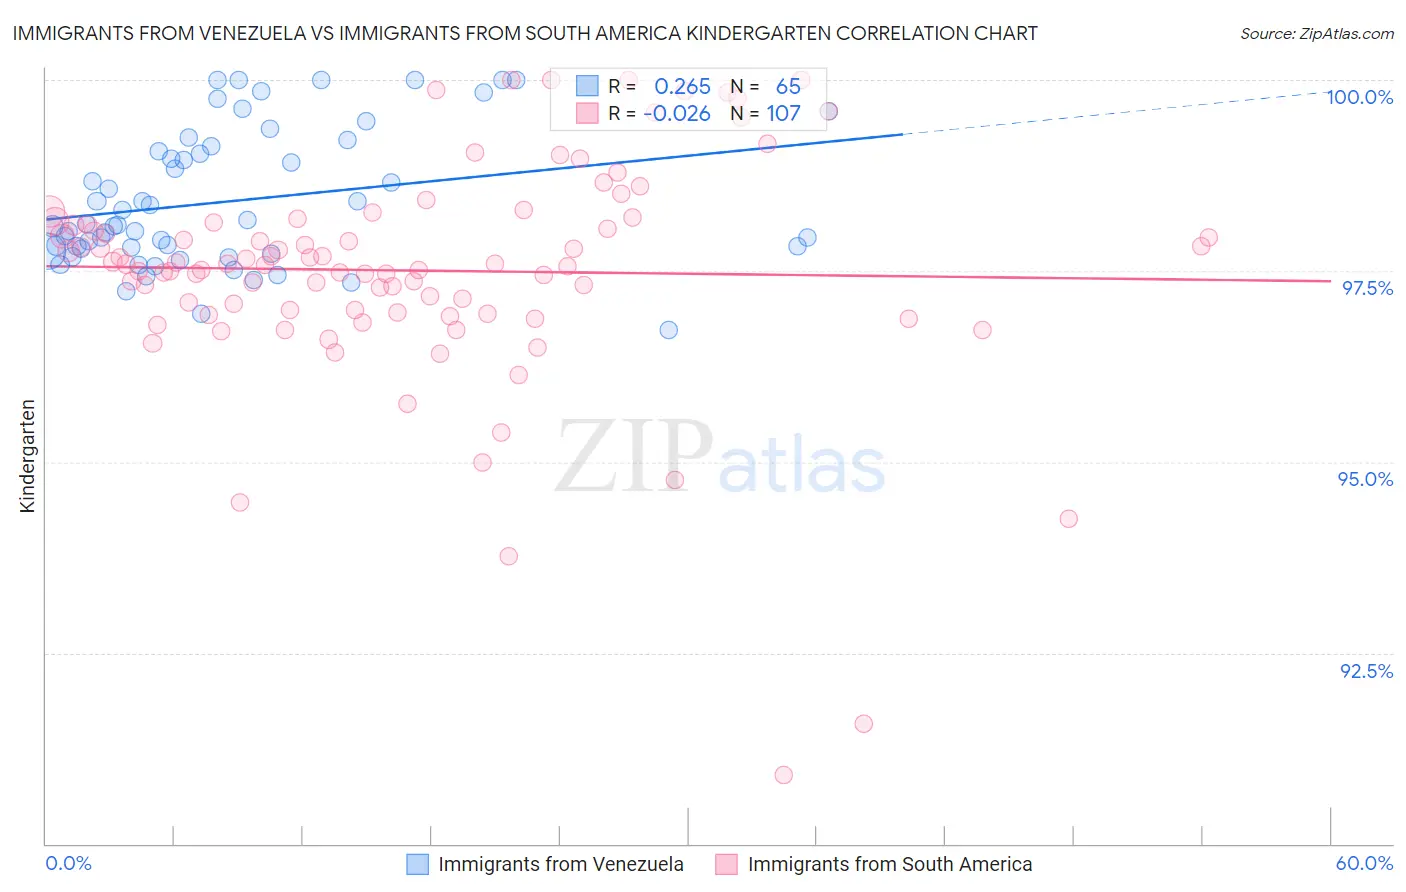 Immigrants from Venezuela vs Immigrants from South America Kindergarten